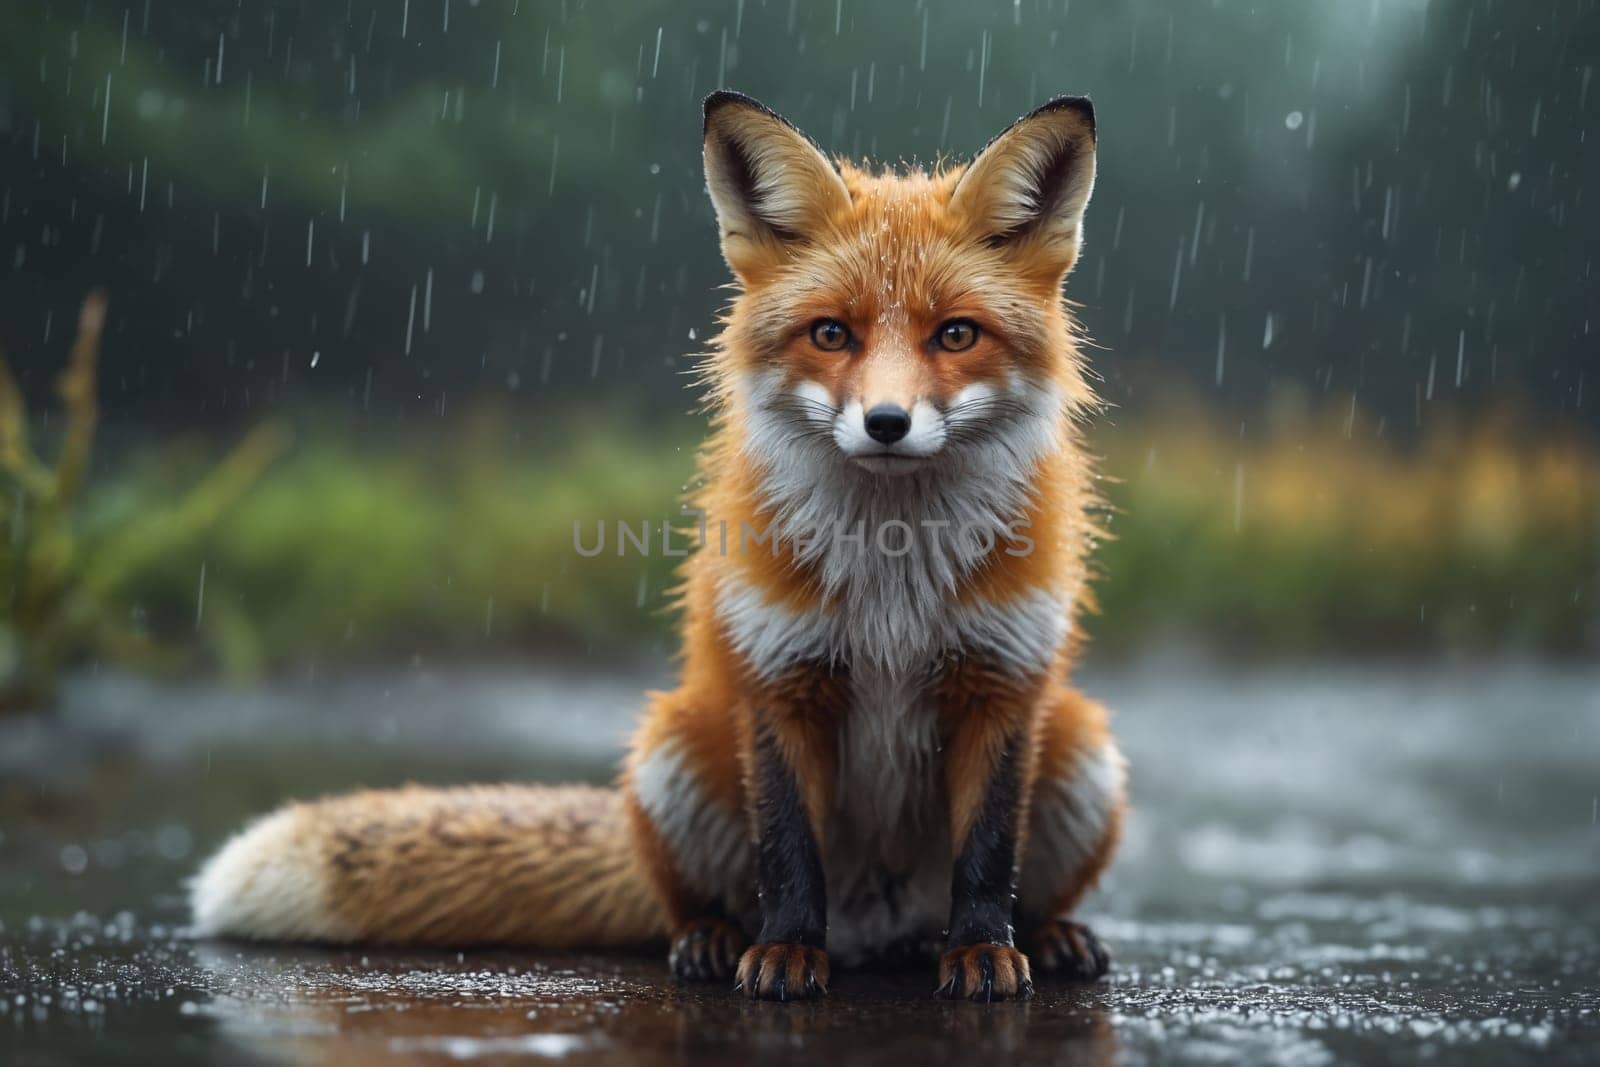 A Fox's Rainy Reprieve: Reflective Moment Amid Nature's Symphony by Andre1ns